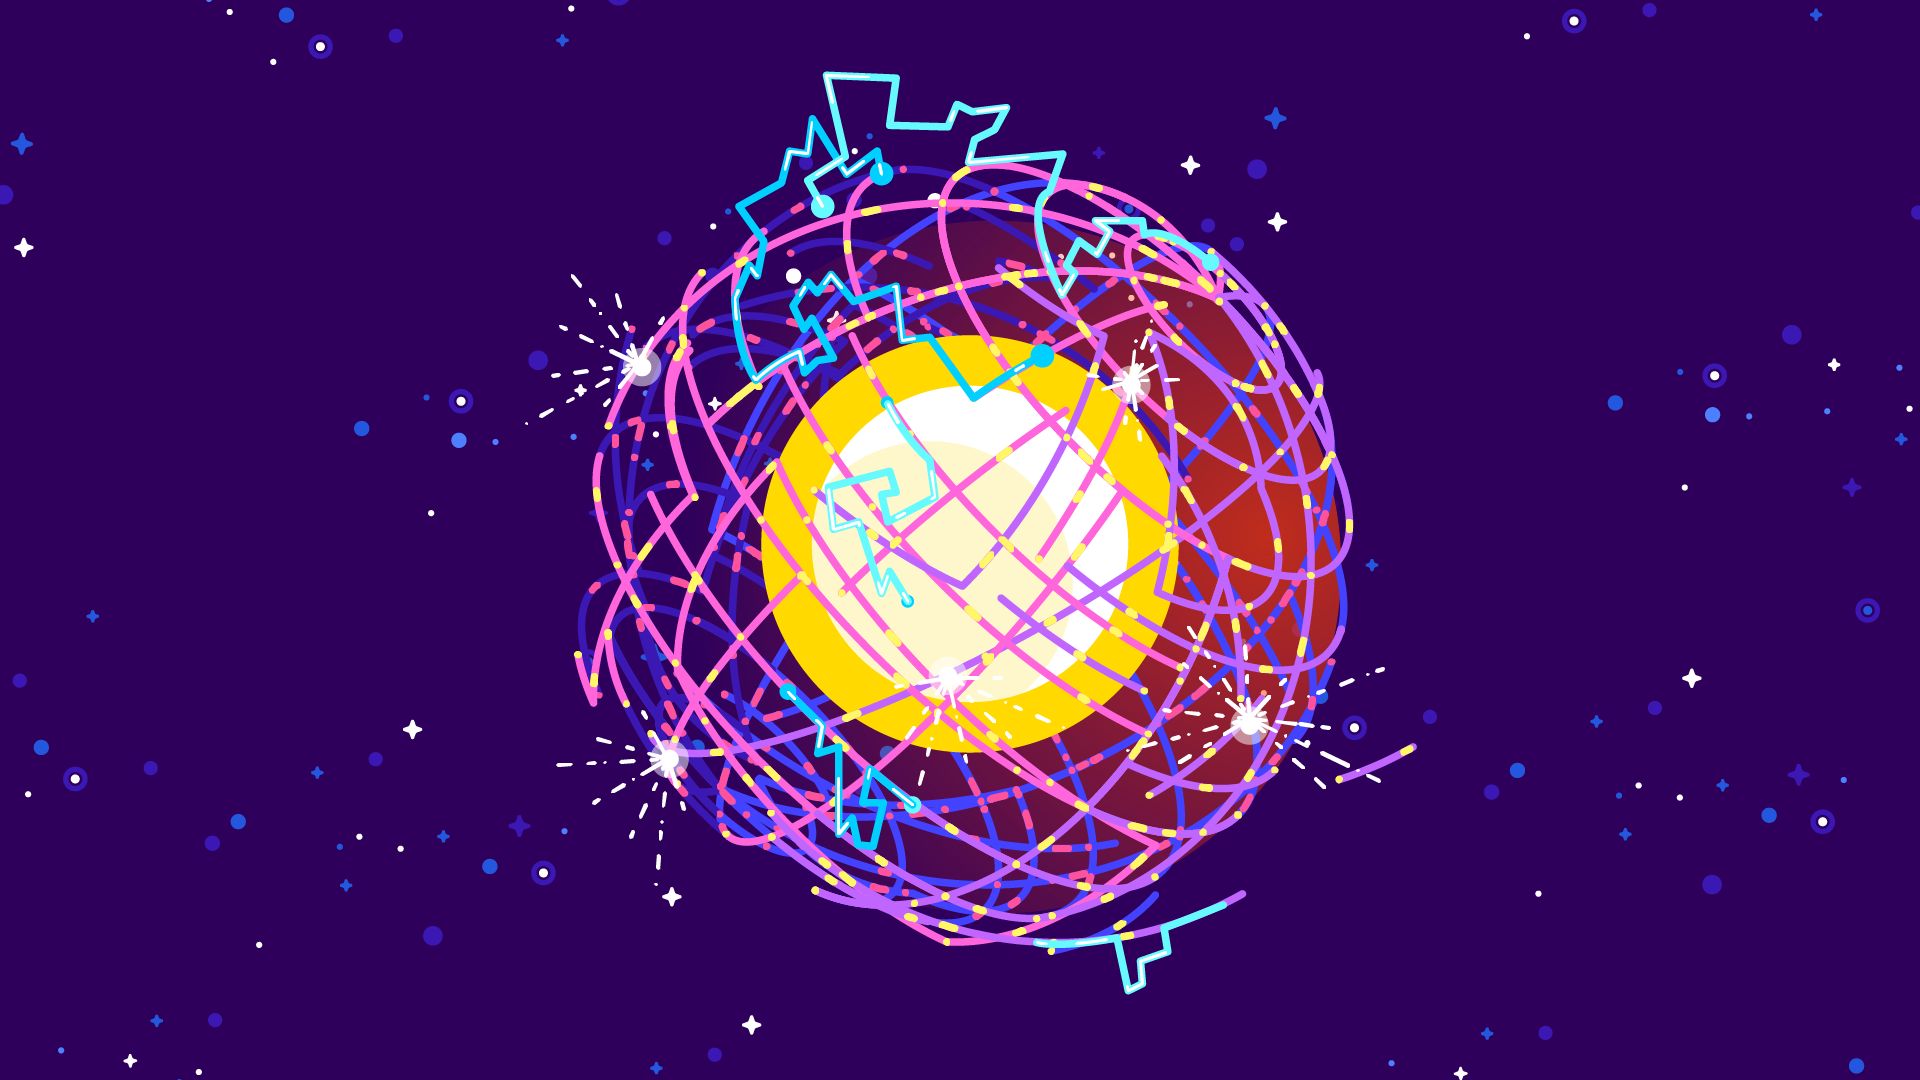 dyson sphere, sci fi